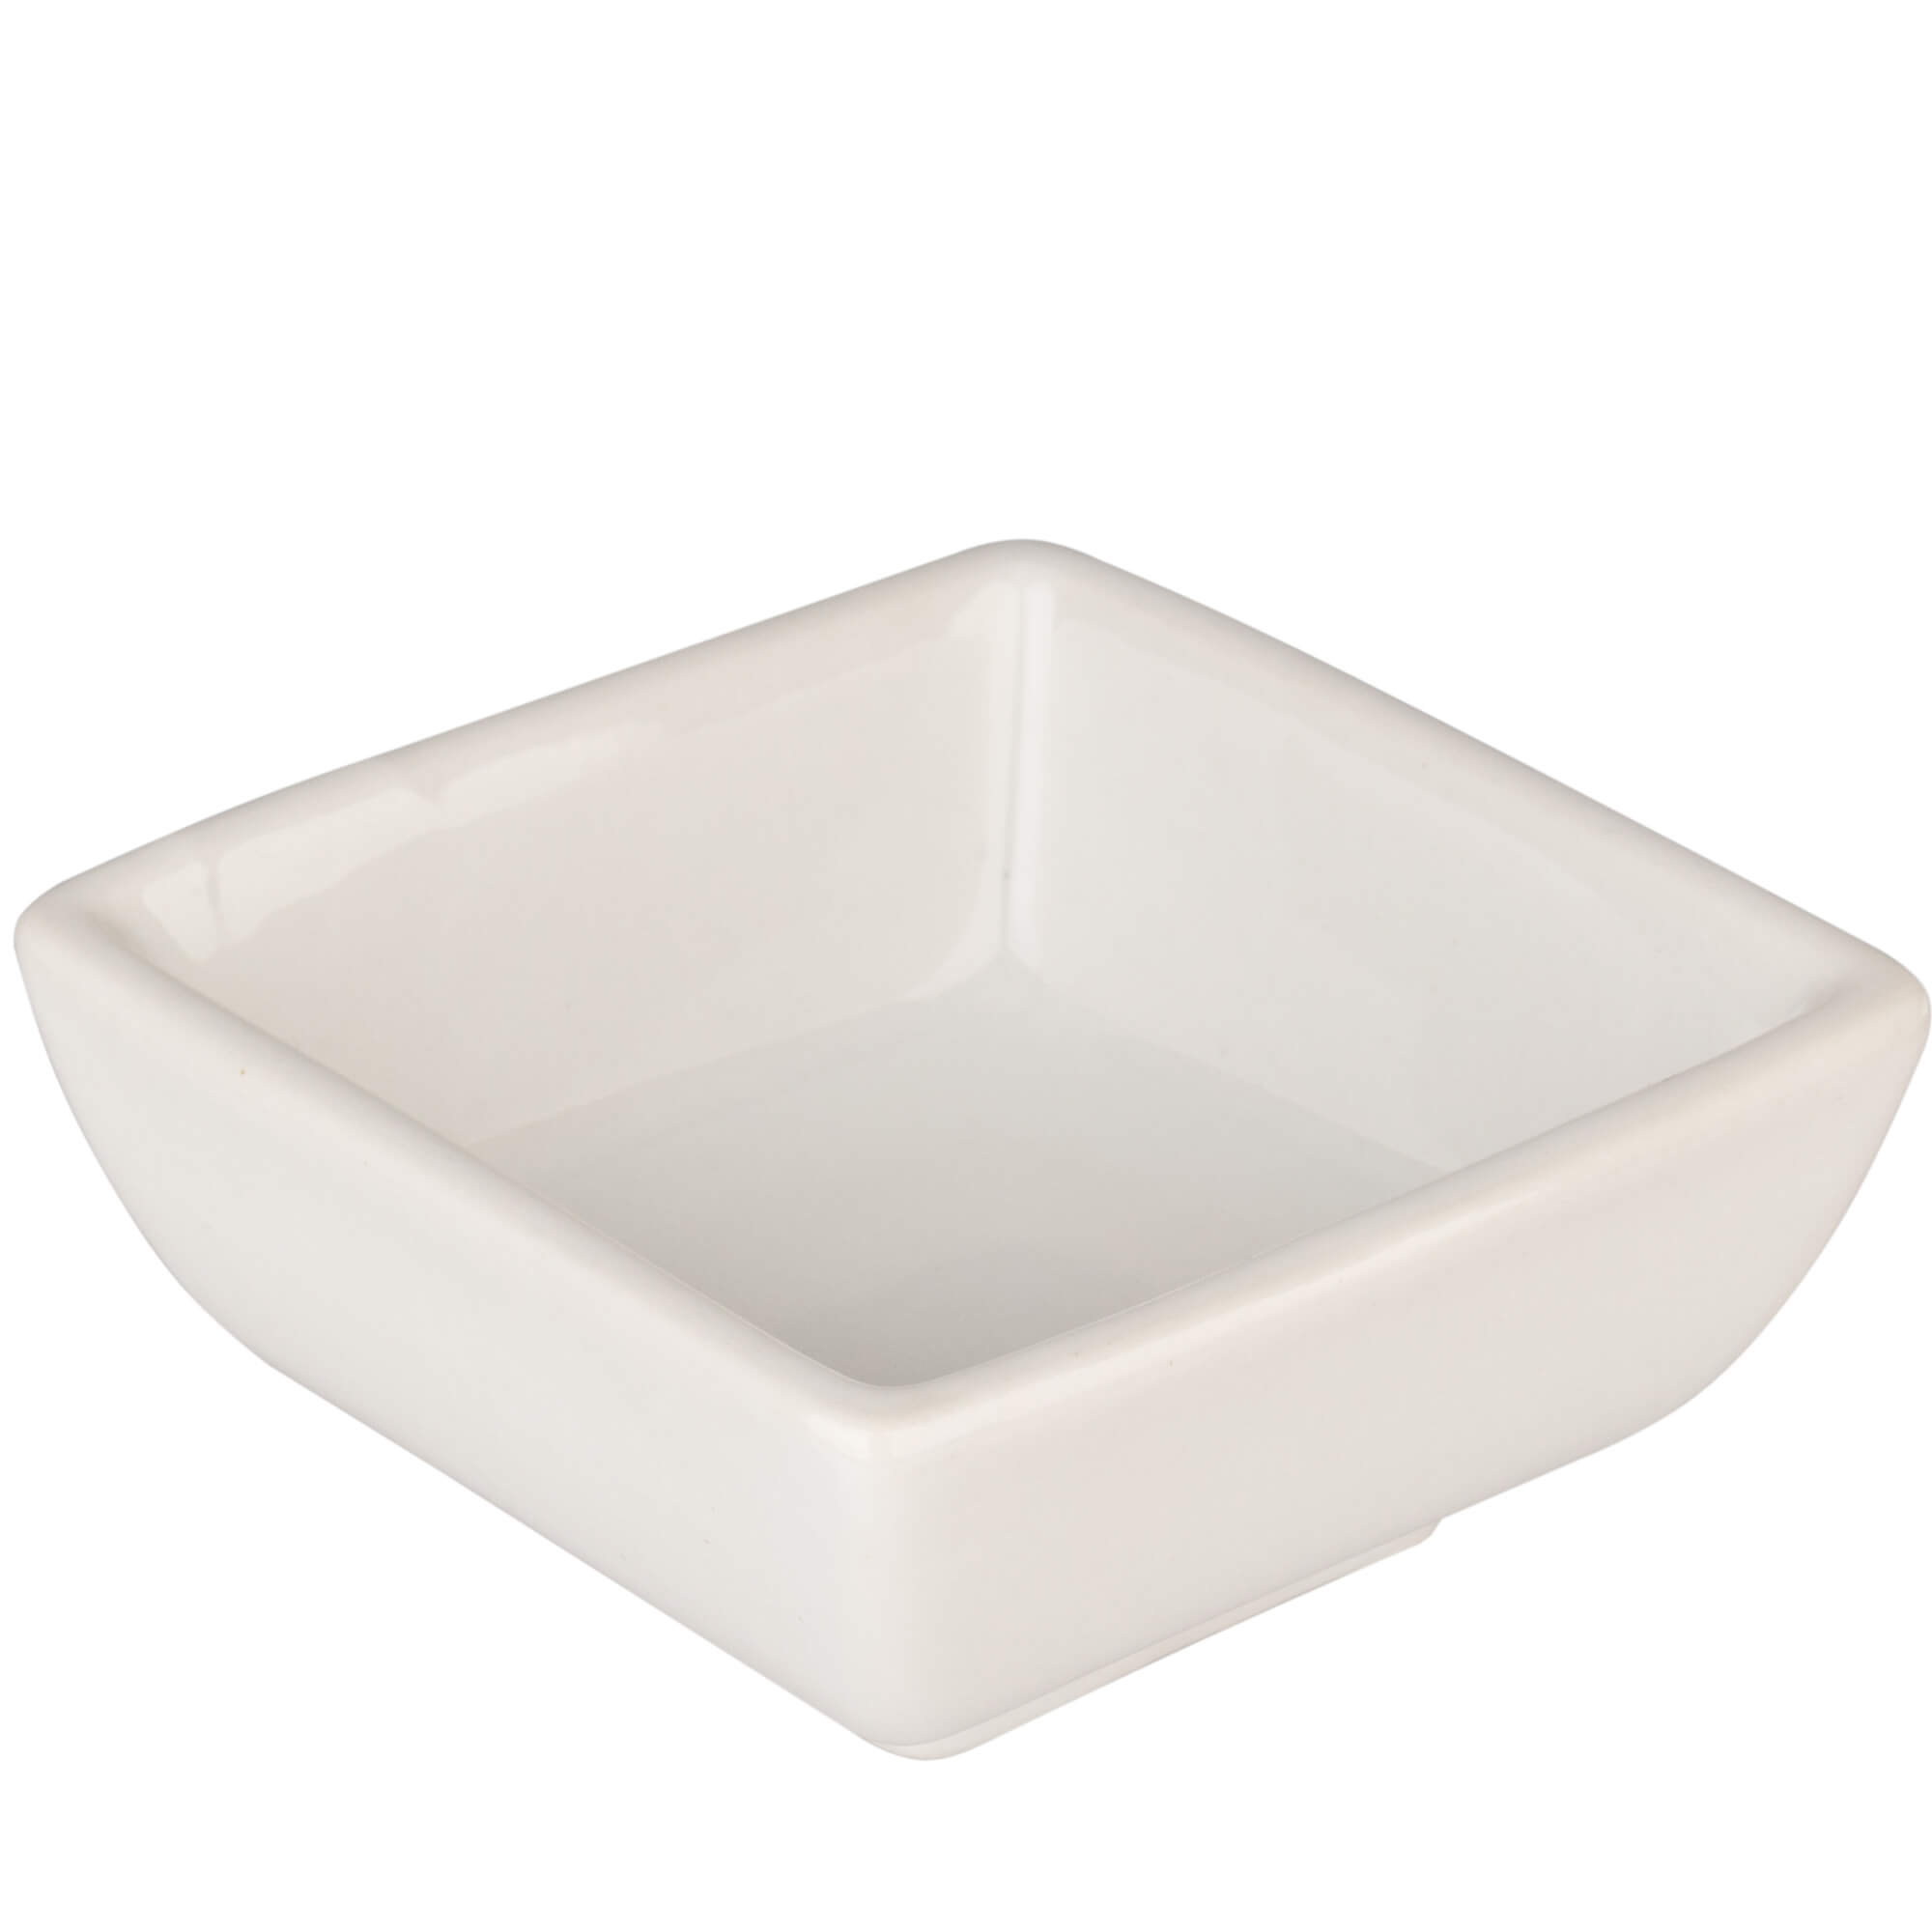 Dip bowl square, porcelain, white - 7x7x4cm